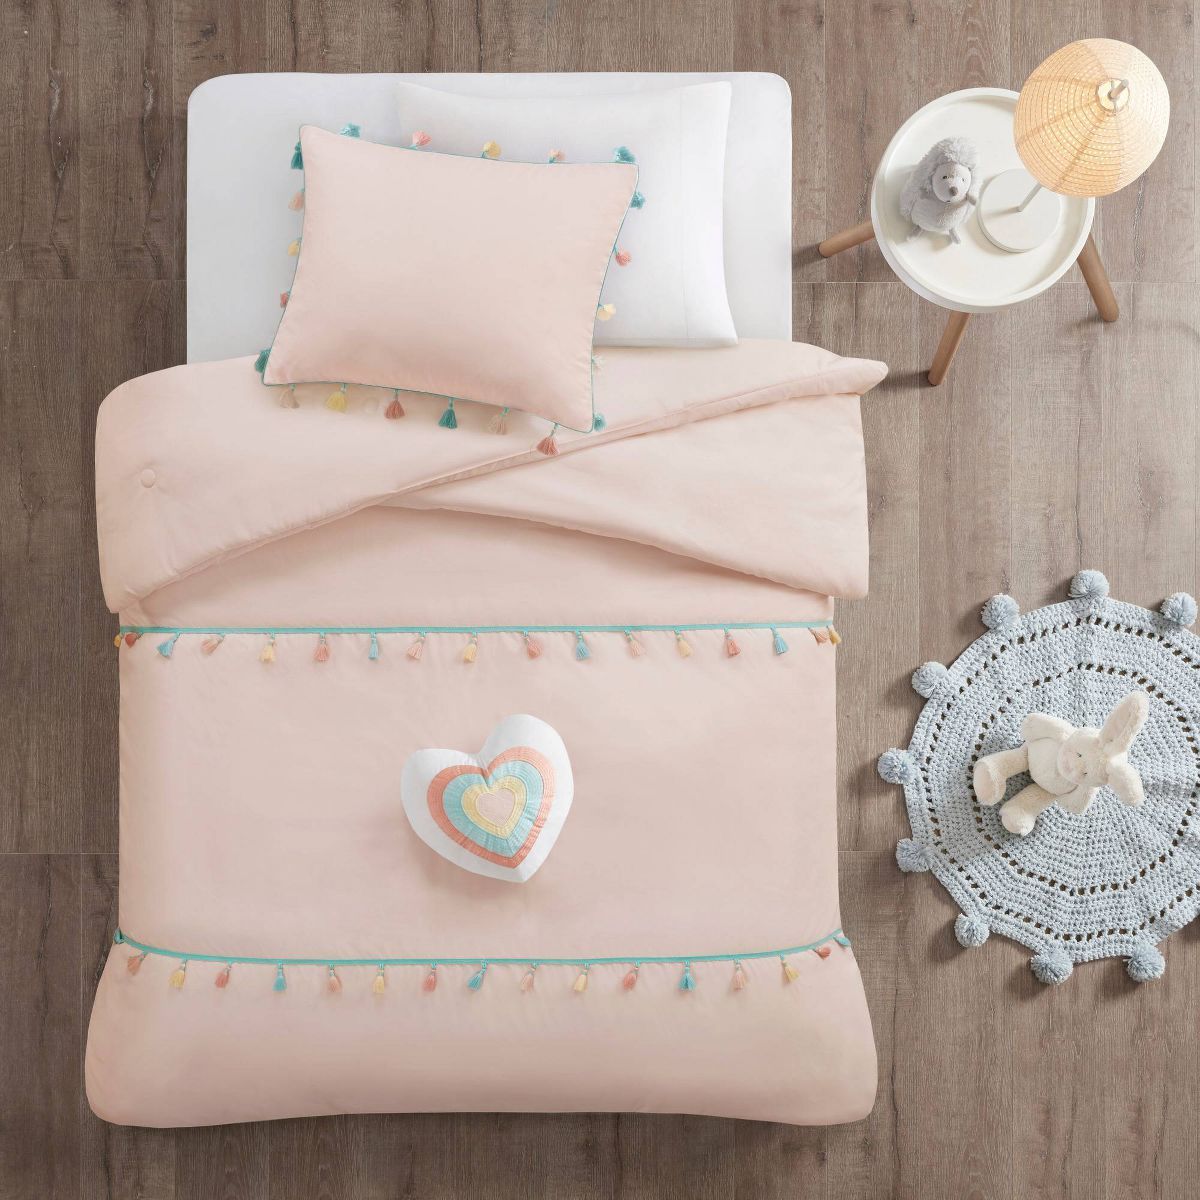 Jamie Tassel Kids' Comforter Set with Heart Shaped Throw Pillow - Mi Zone | Target